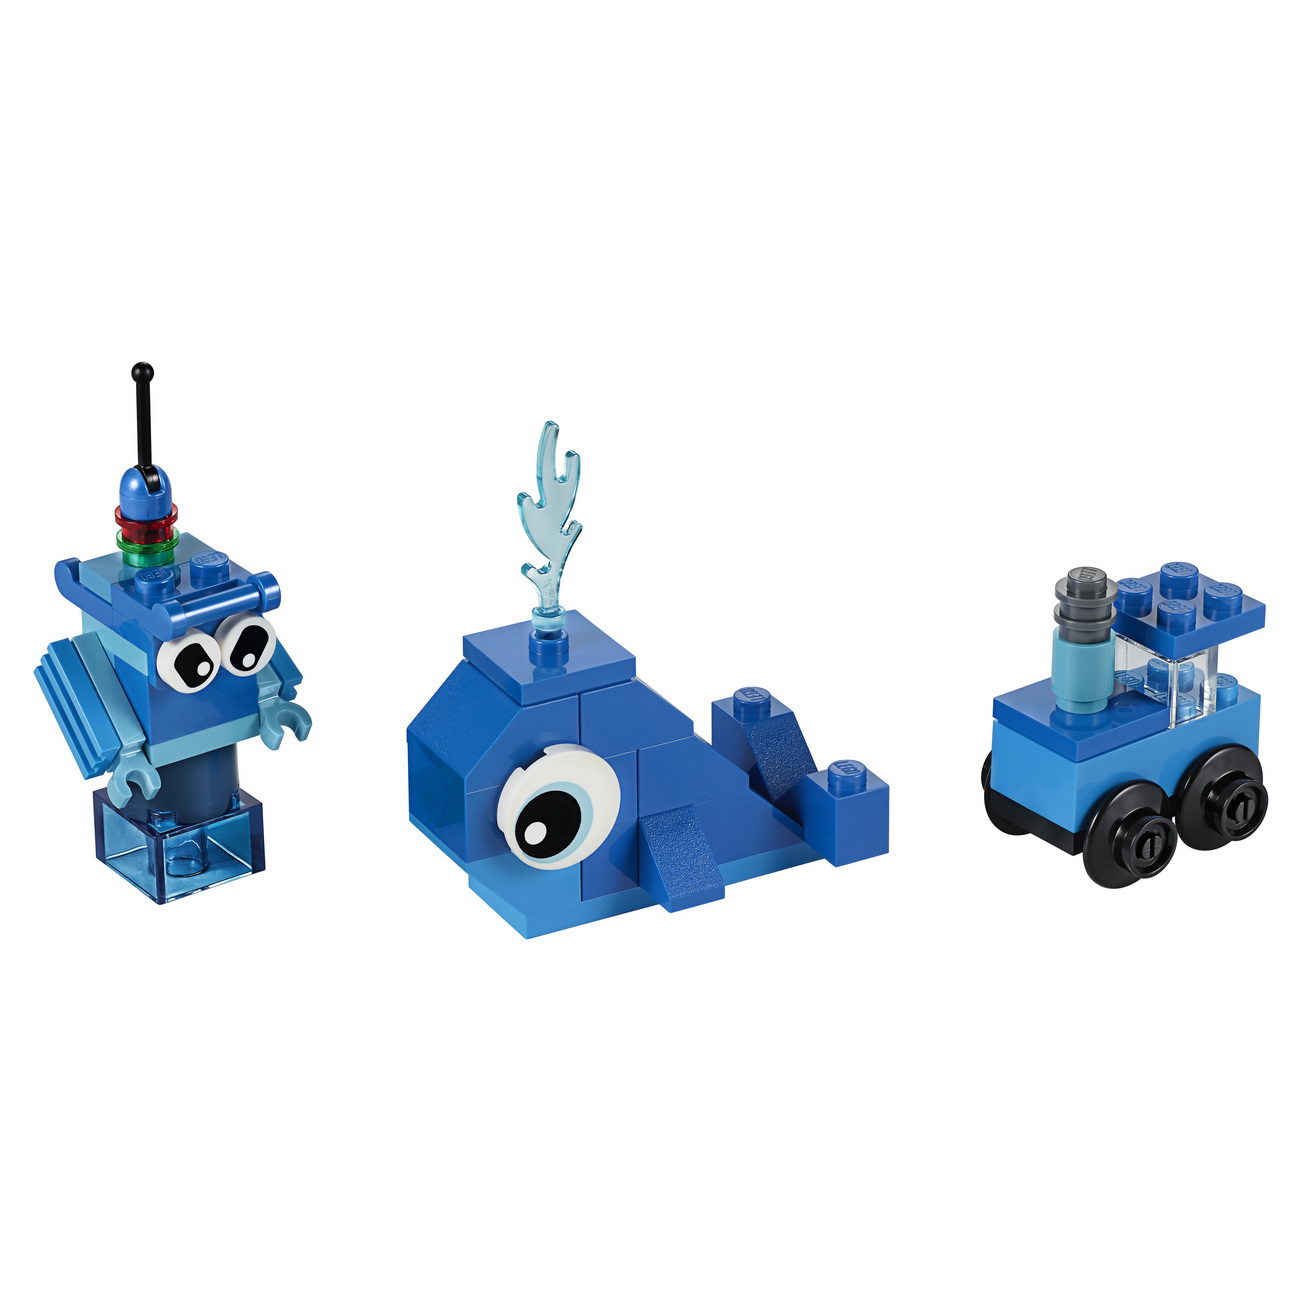 LEGO Classic - Blaues Kreativ-Set (11006)